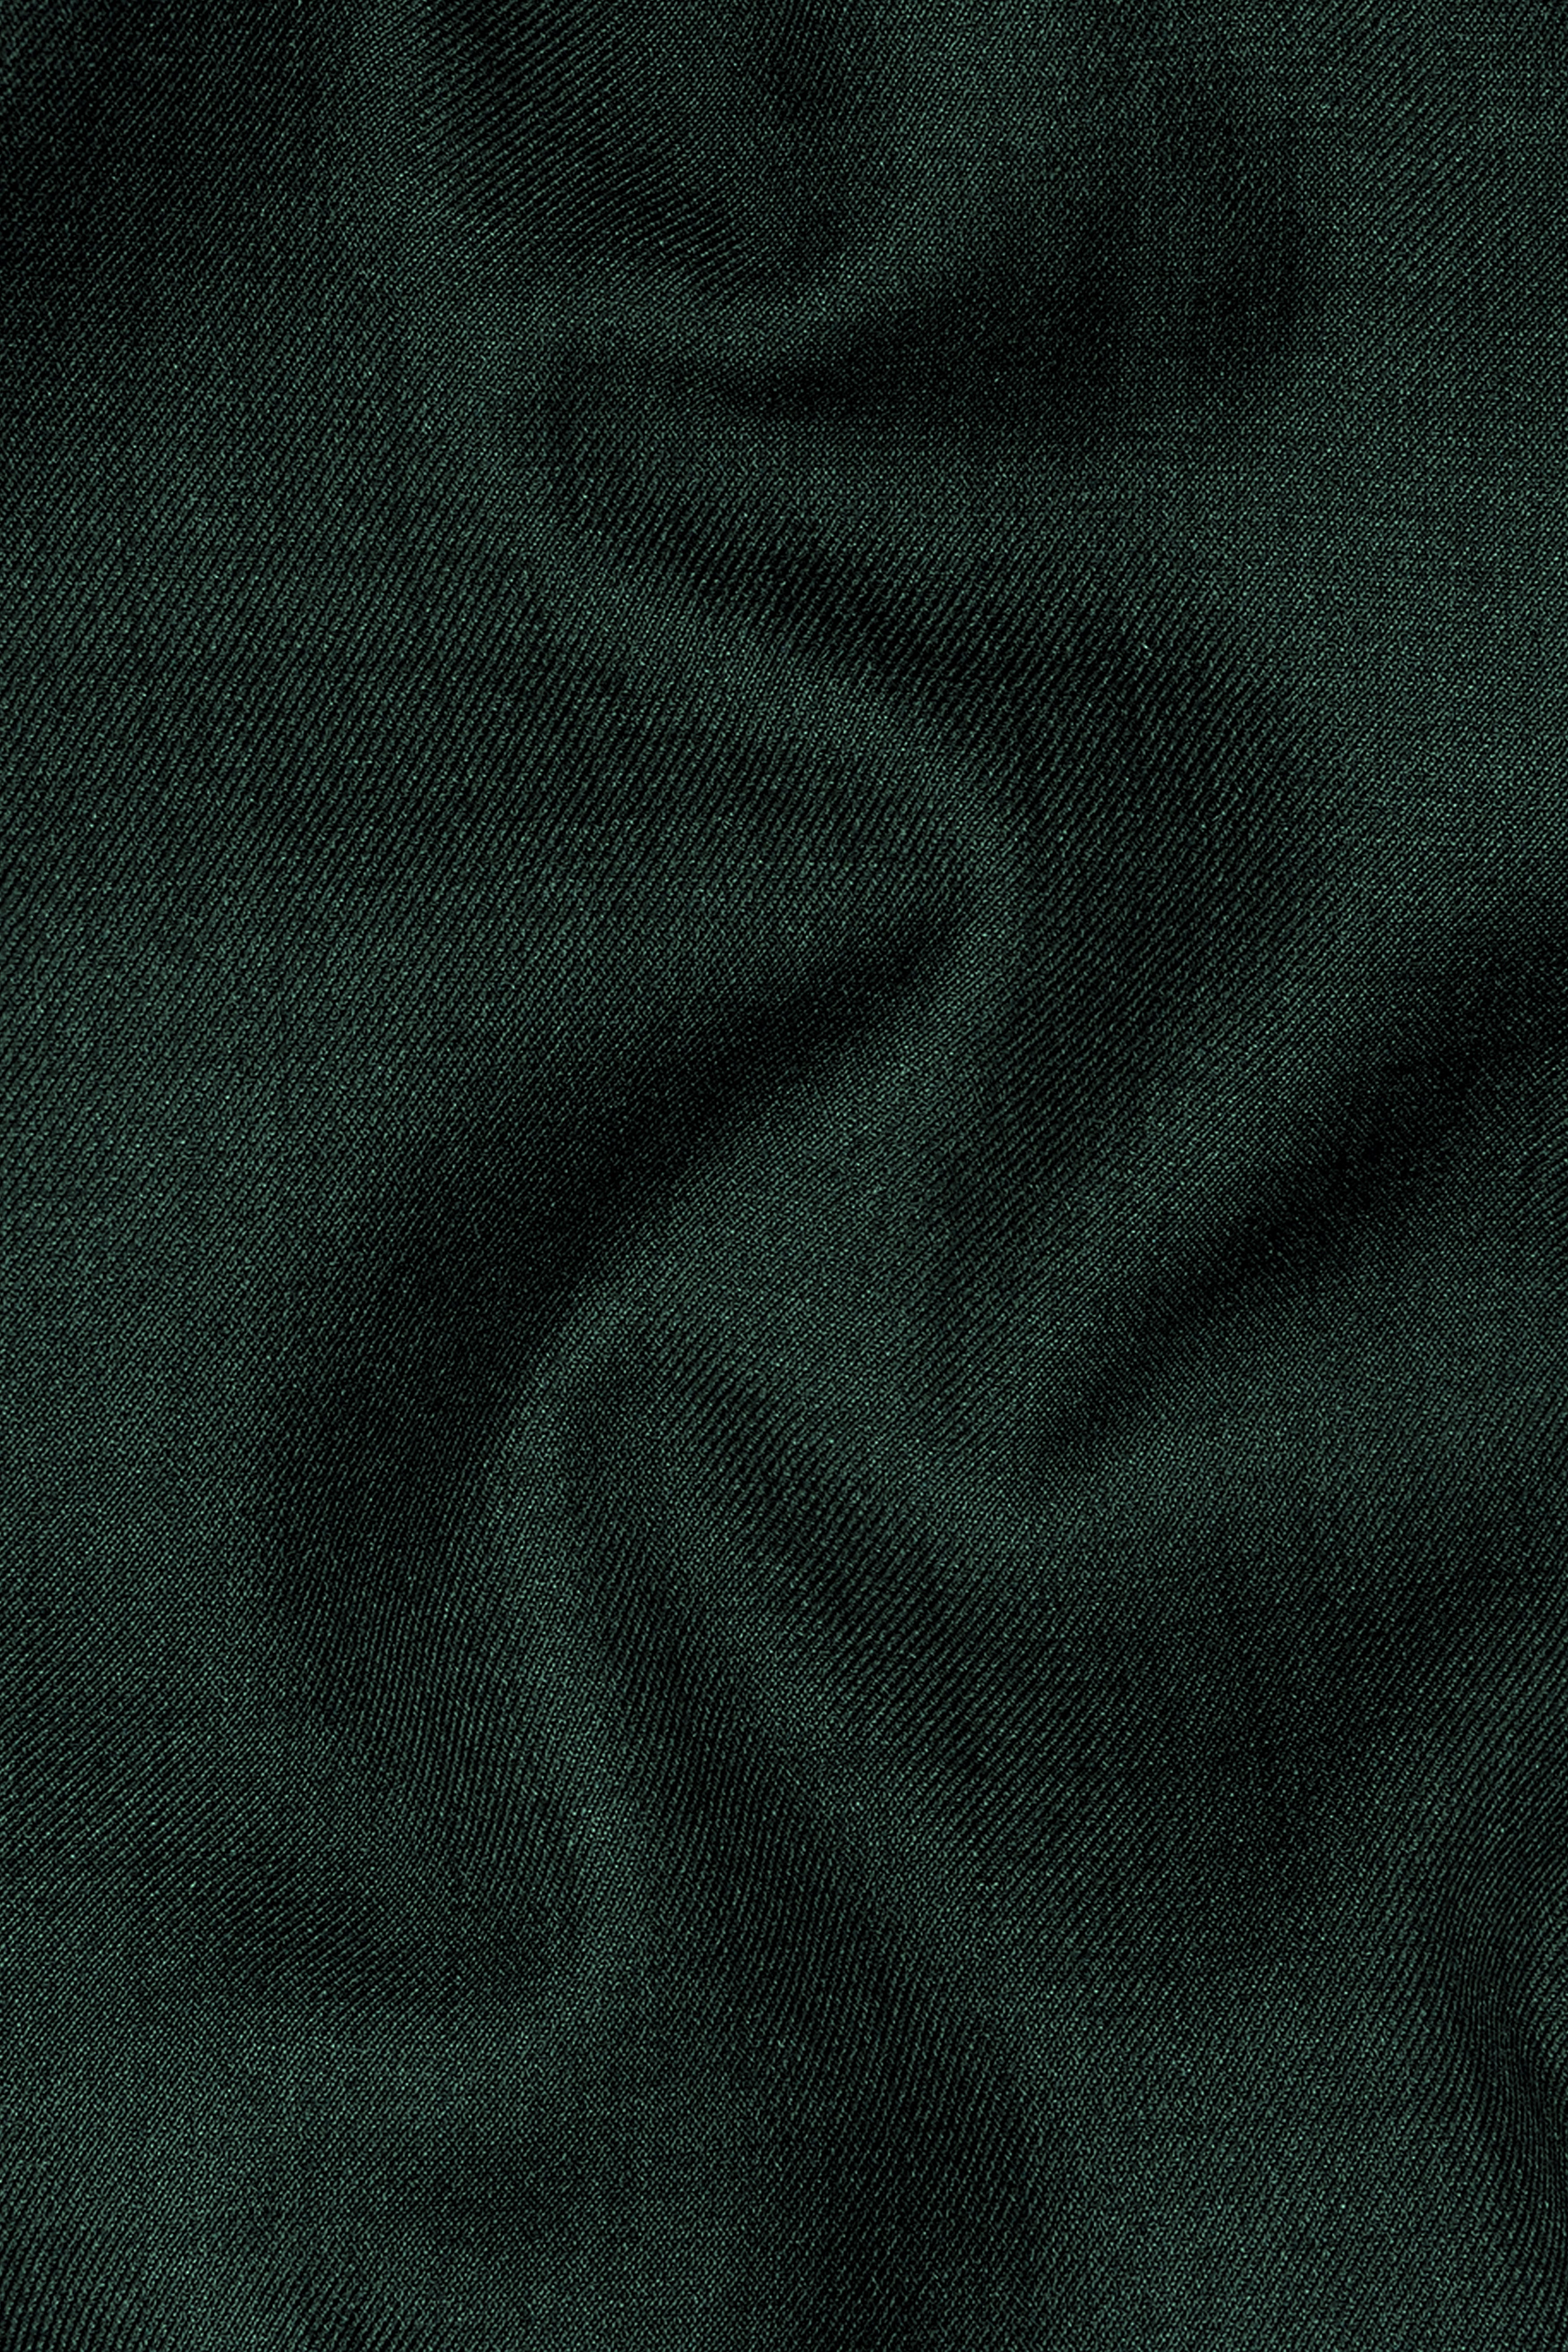 Gable Green Wool Rich Suit ST2901-SB-36,ST2901-SB-38,ST2901-SB-40,ST2901-SB-42,ST2901-SB-44,ST2901-SB-46,ST2901-SB-48,ST2901-SB-50,ST2901-SB-52,ST2901-SB-54,ST2901-SB-56,ST2901-SB-58,ST2901-SB-60